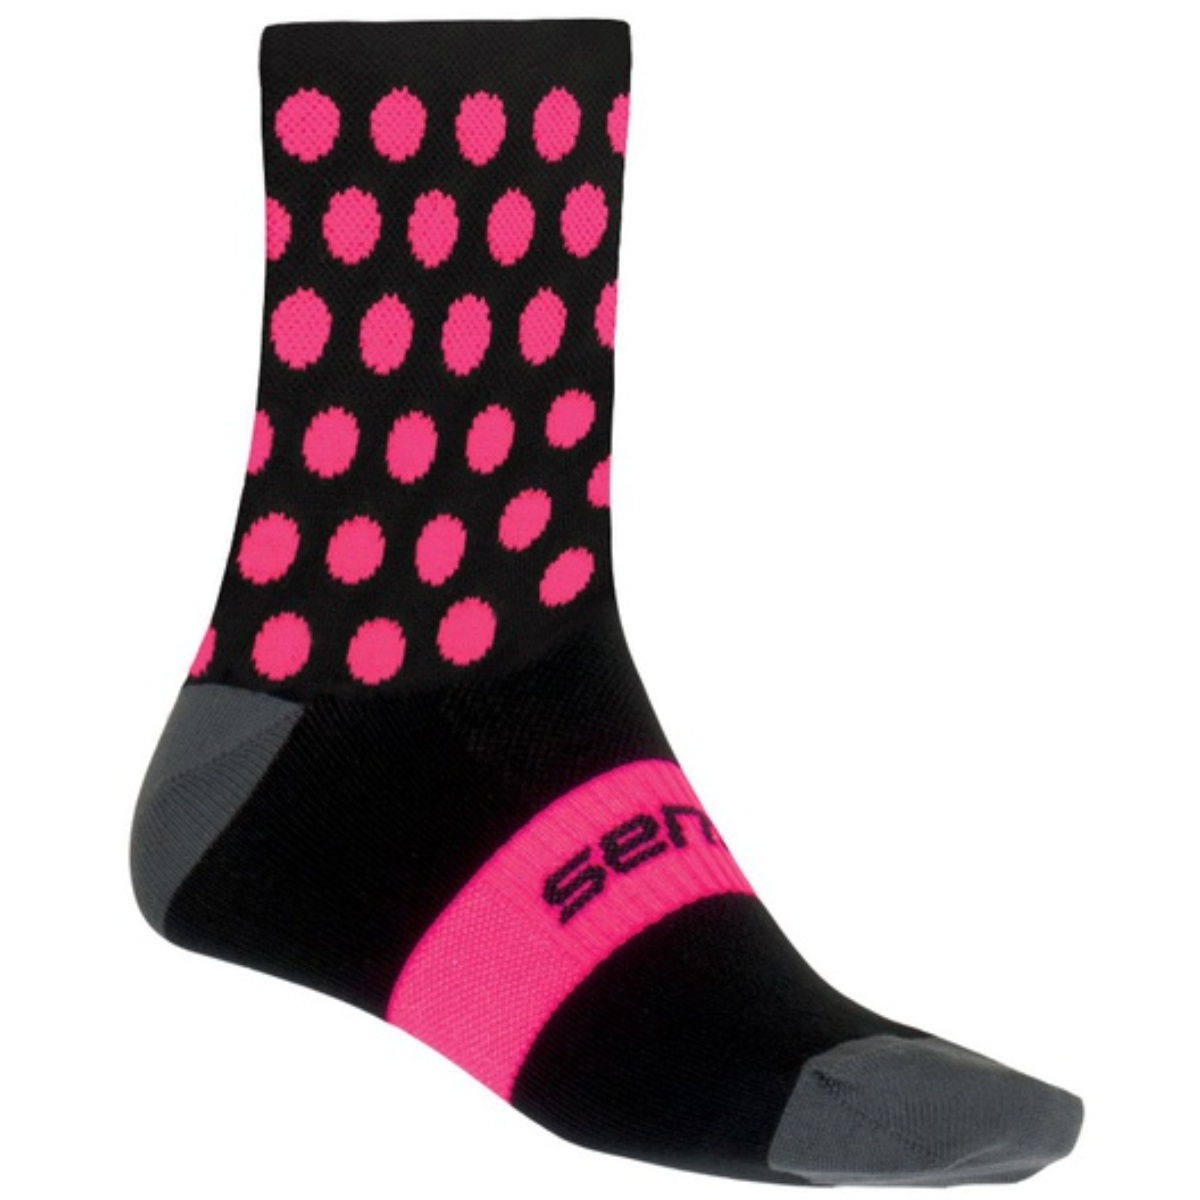 Sensor ponožky DOTS NEW černo-růžové